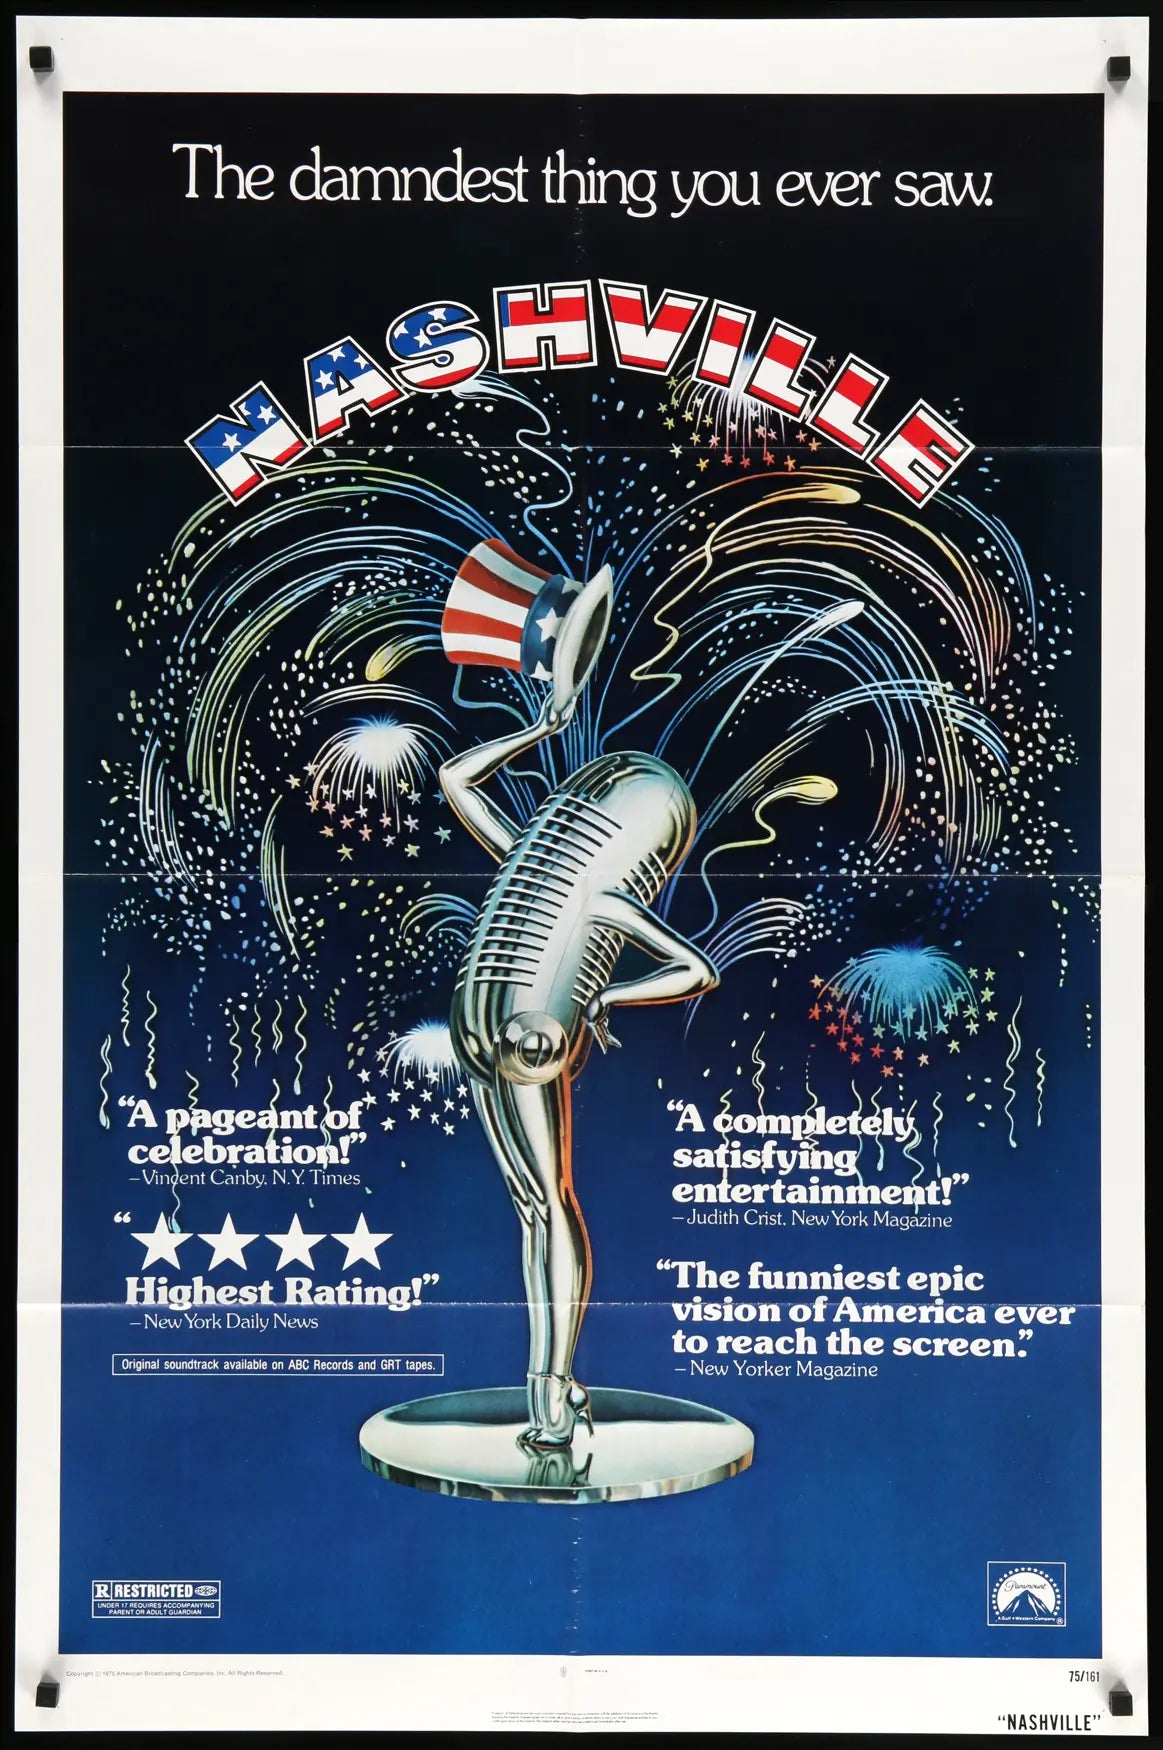 Nashville (1975) original movie poster for sale at Original Film Art